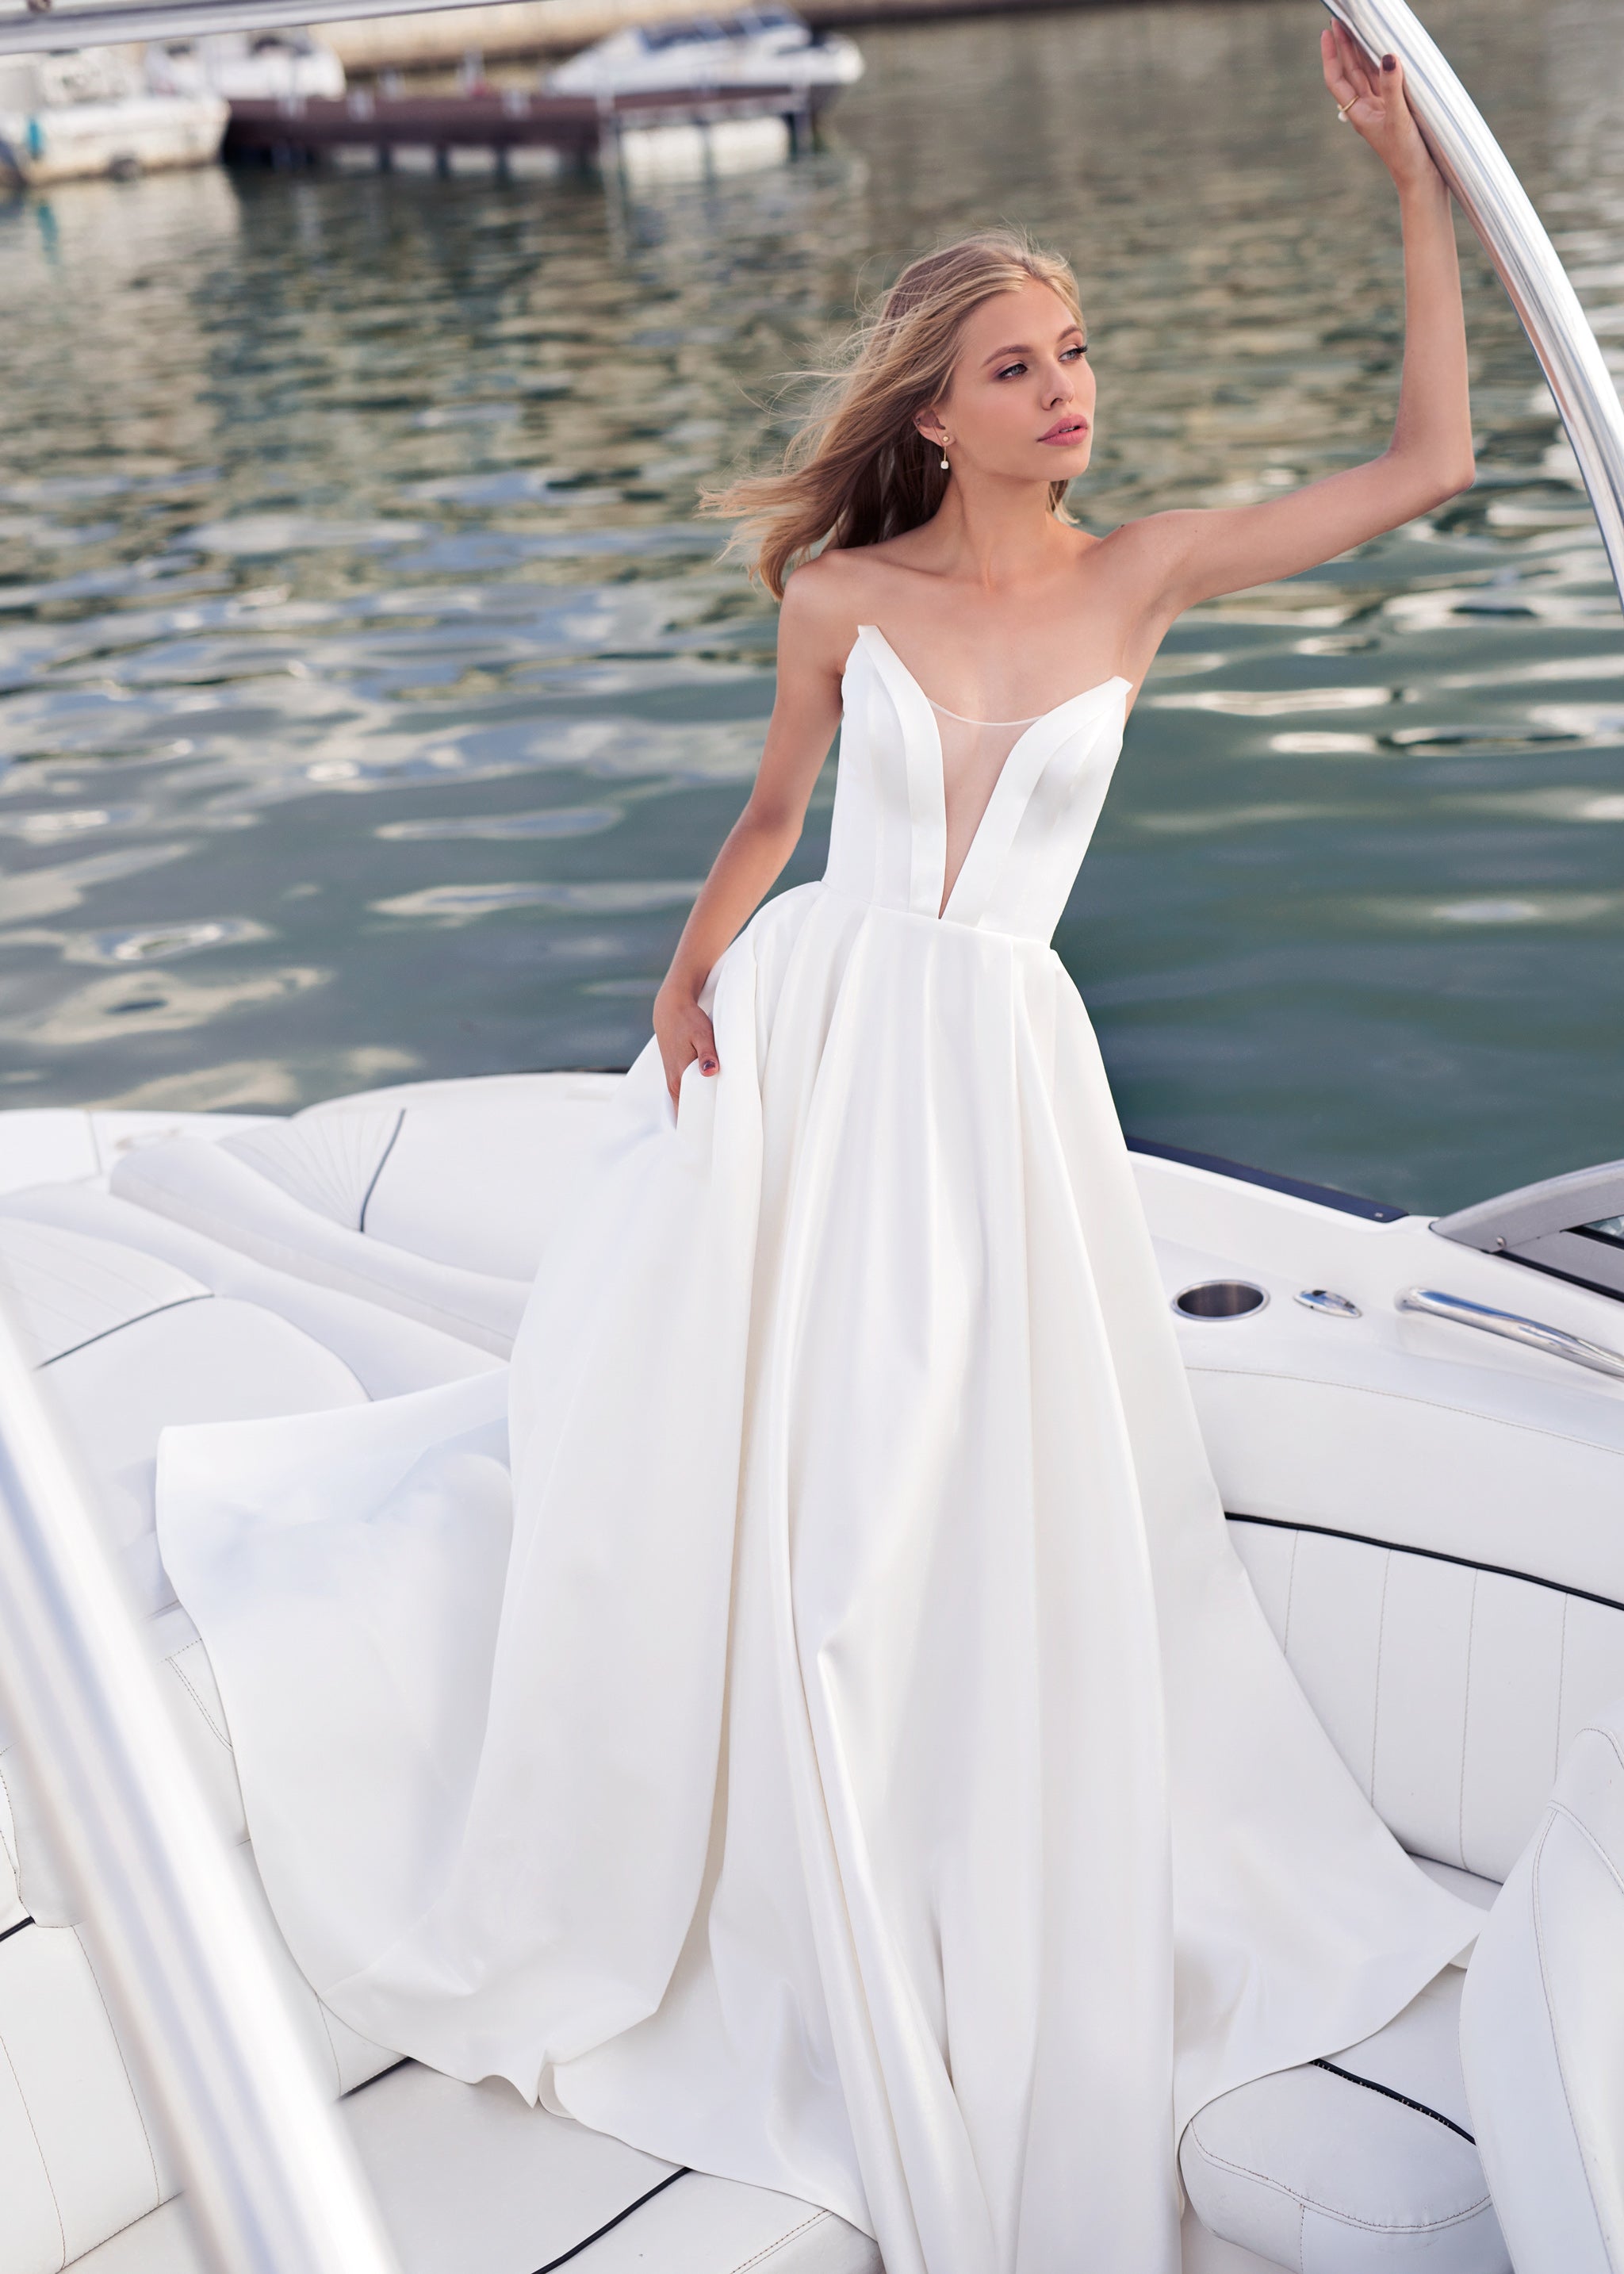 Soft satin white wedding dress for modern bride.